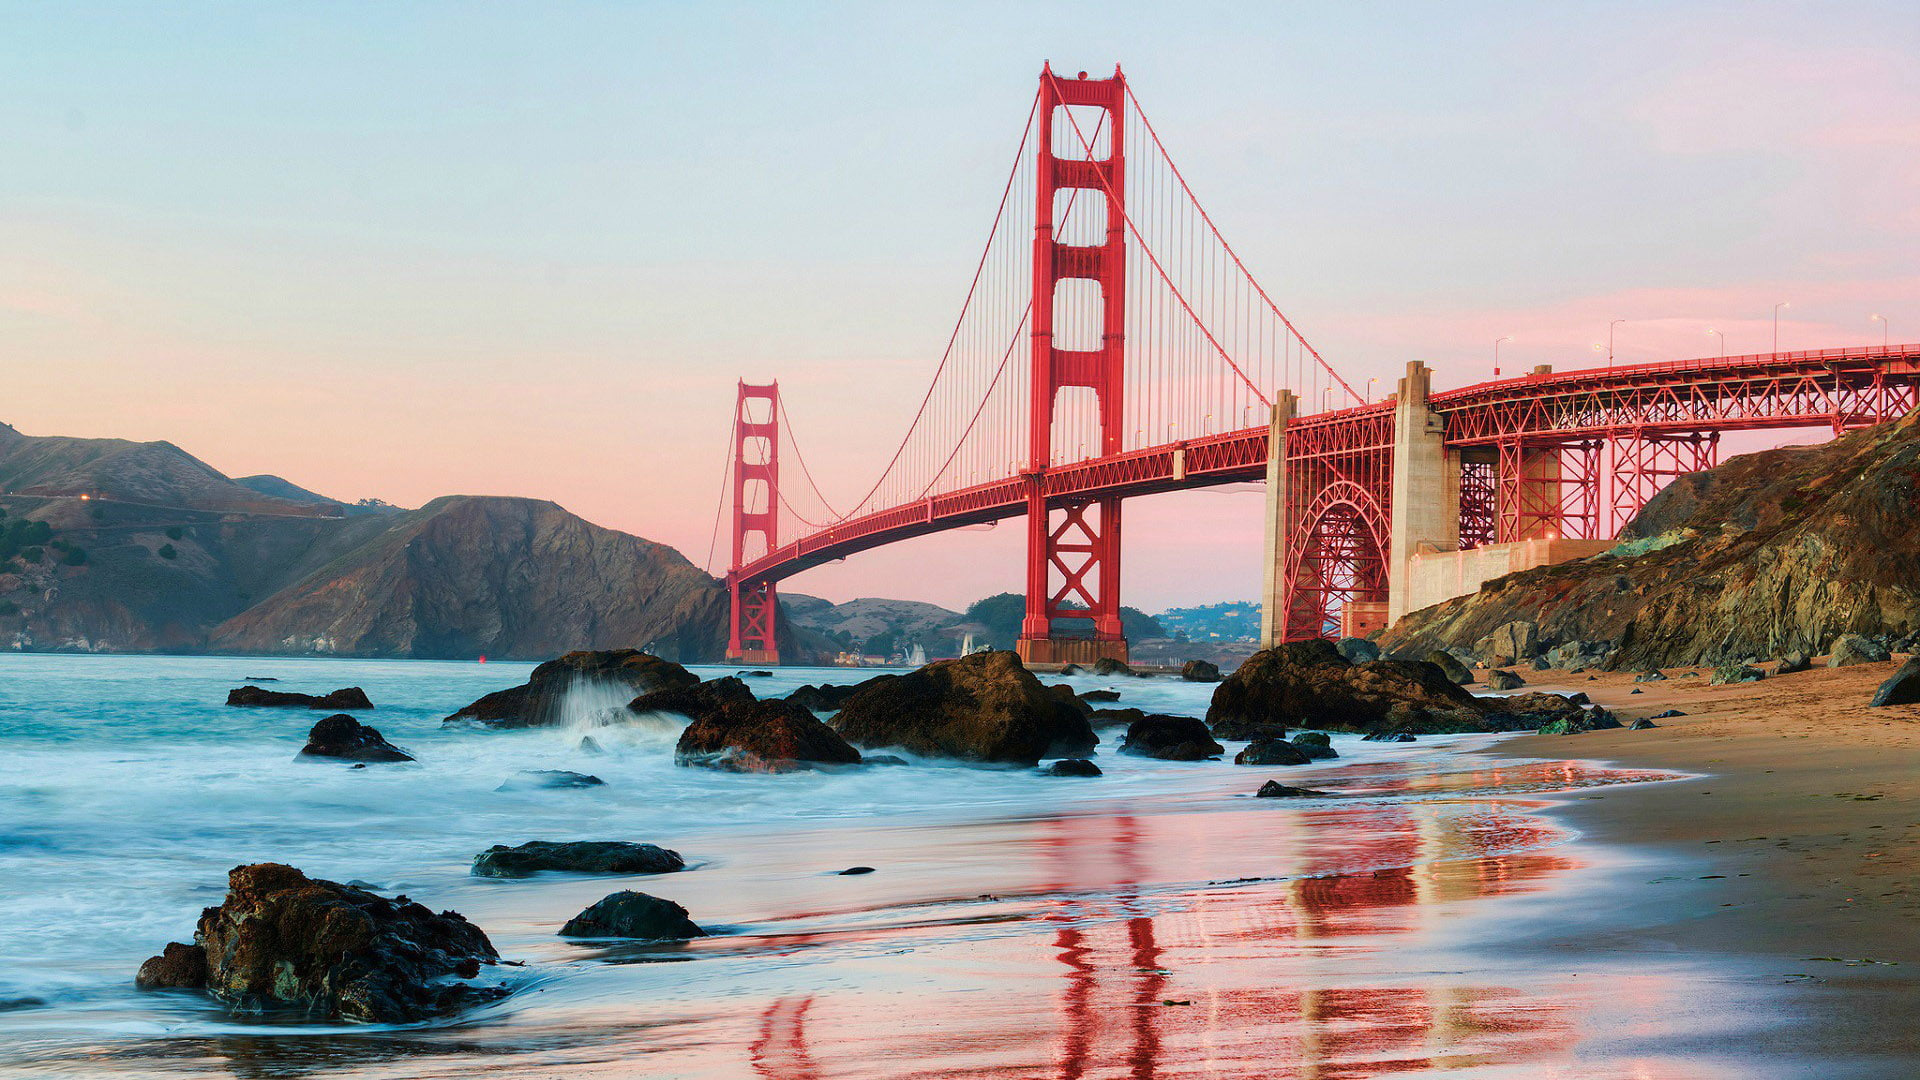 Landscape: The Golden Gate Bridge in San Francisco, San Francisco Bay, California. 1920x1080 Full HD Wallpaper.